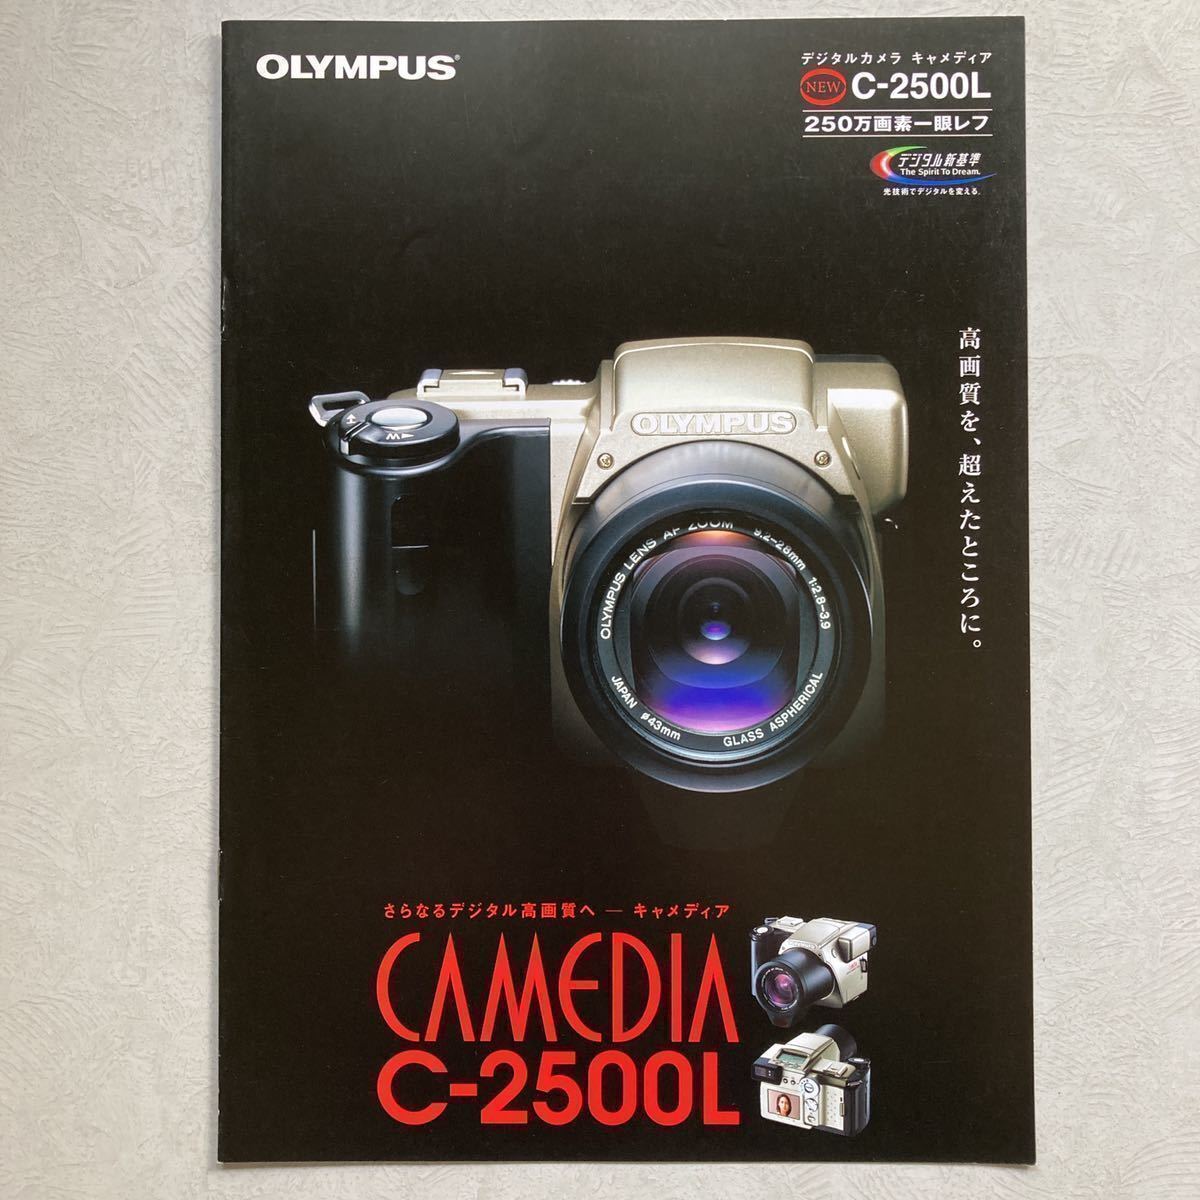  free shipping catalog digital camera OLYMPUS Olympus CAMEDIAkya media C-2500L Nakatani Miki 